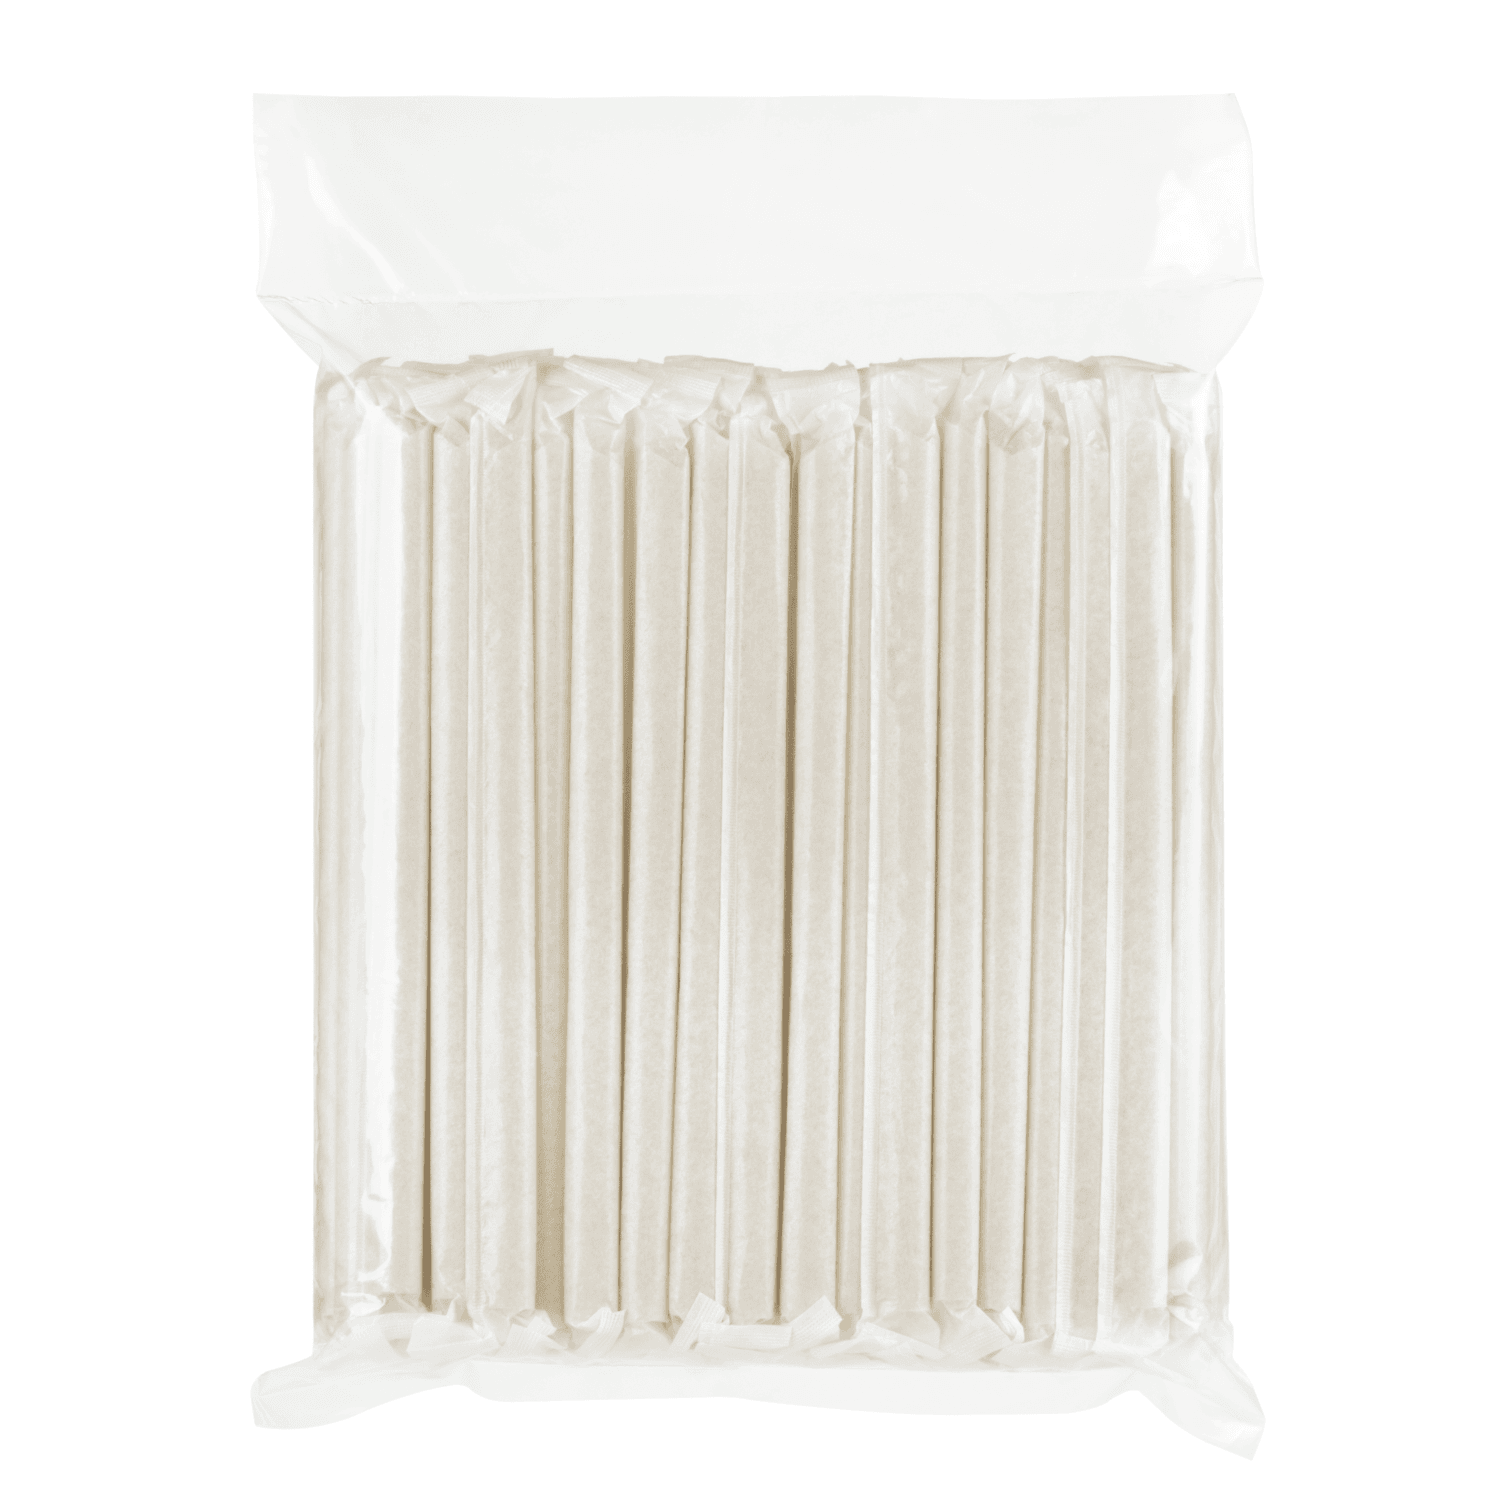 Karat Earth 9" Diagonal Cut Bamboo Fiber Colossal Straws (12mm) Paper Wrappep, Natural - Bag of 80 pcs